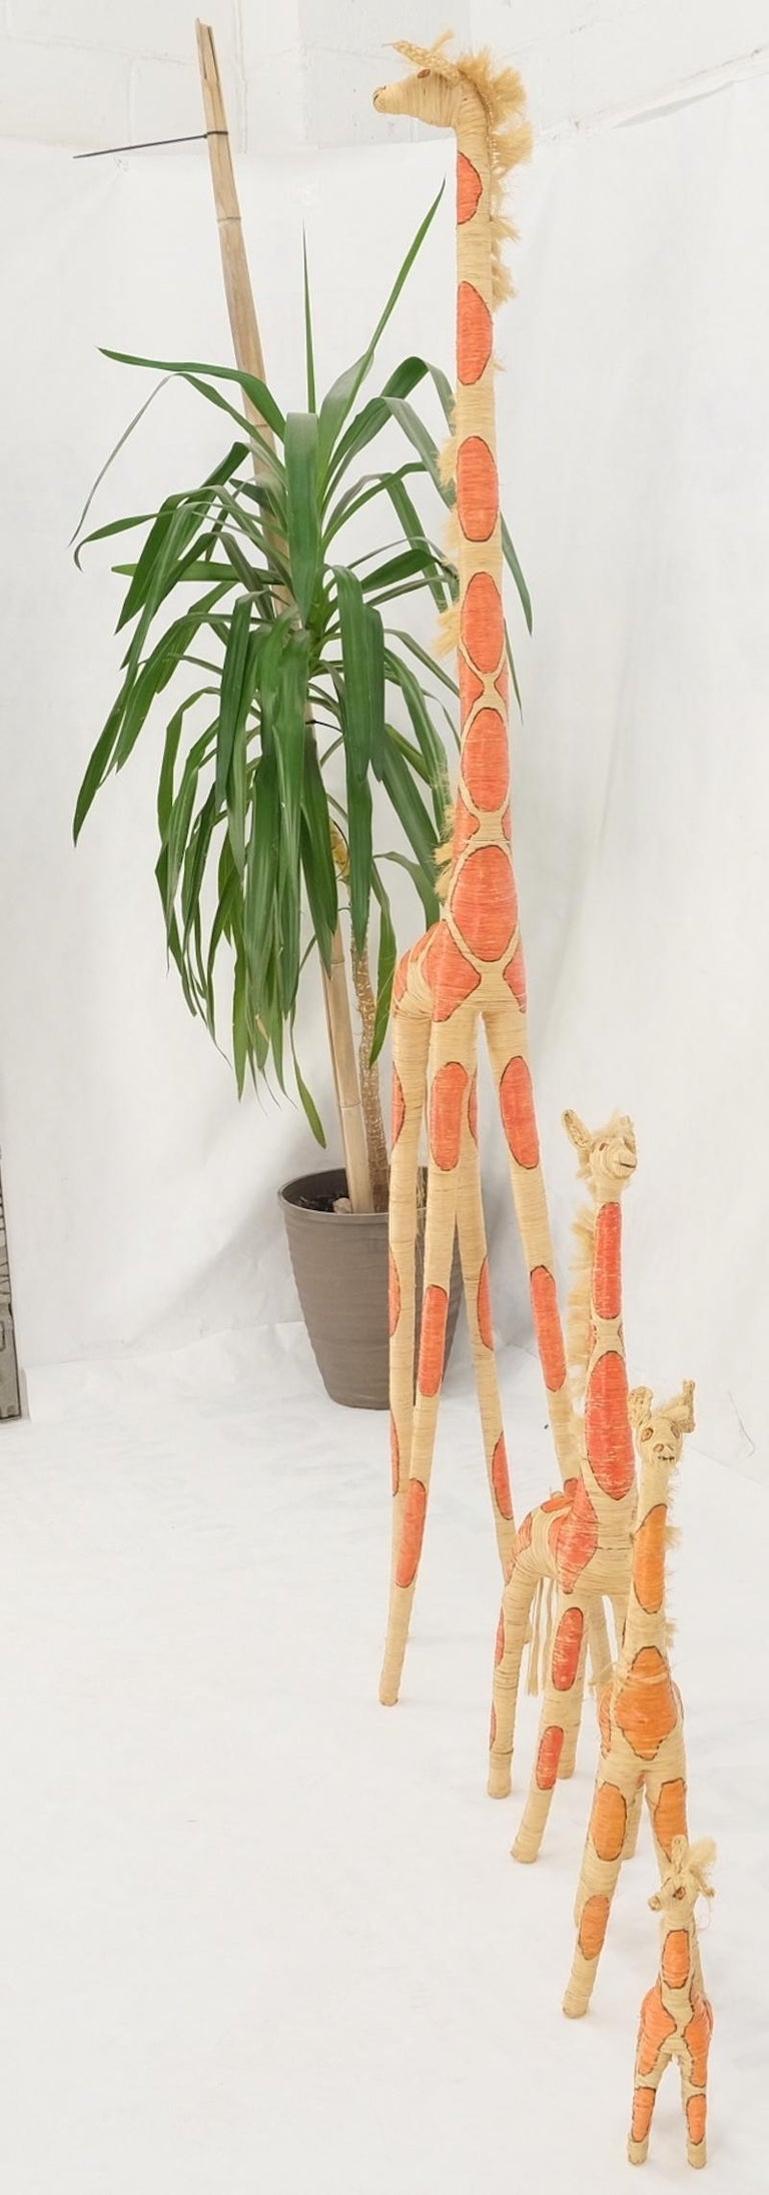 Group of 4 Giraffe Folk Art Rattan Bamboo Straw Hand Painted Animal Sculptures